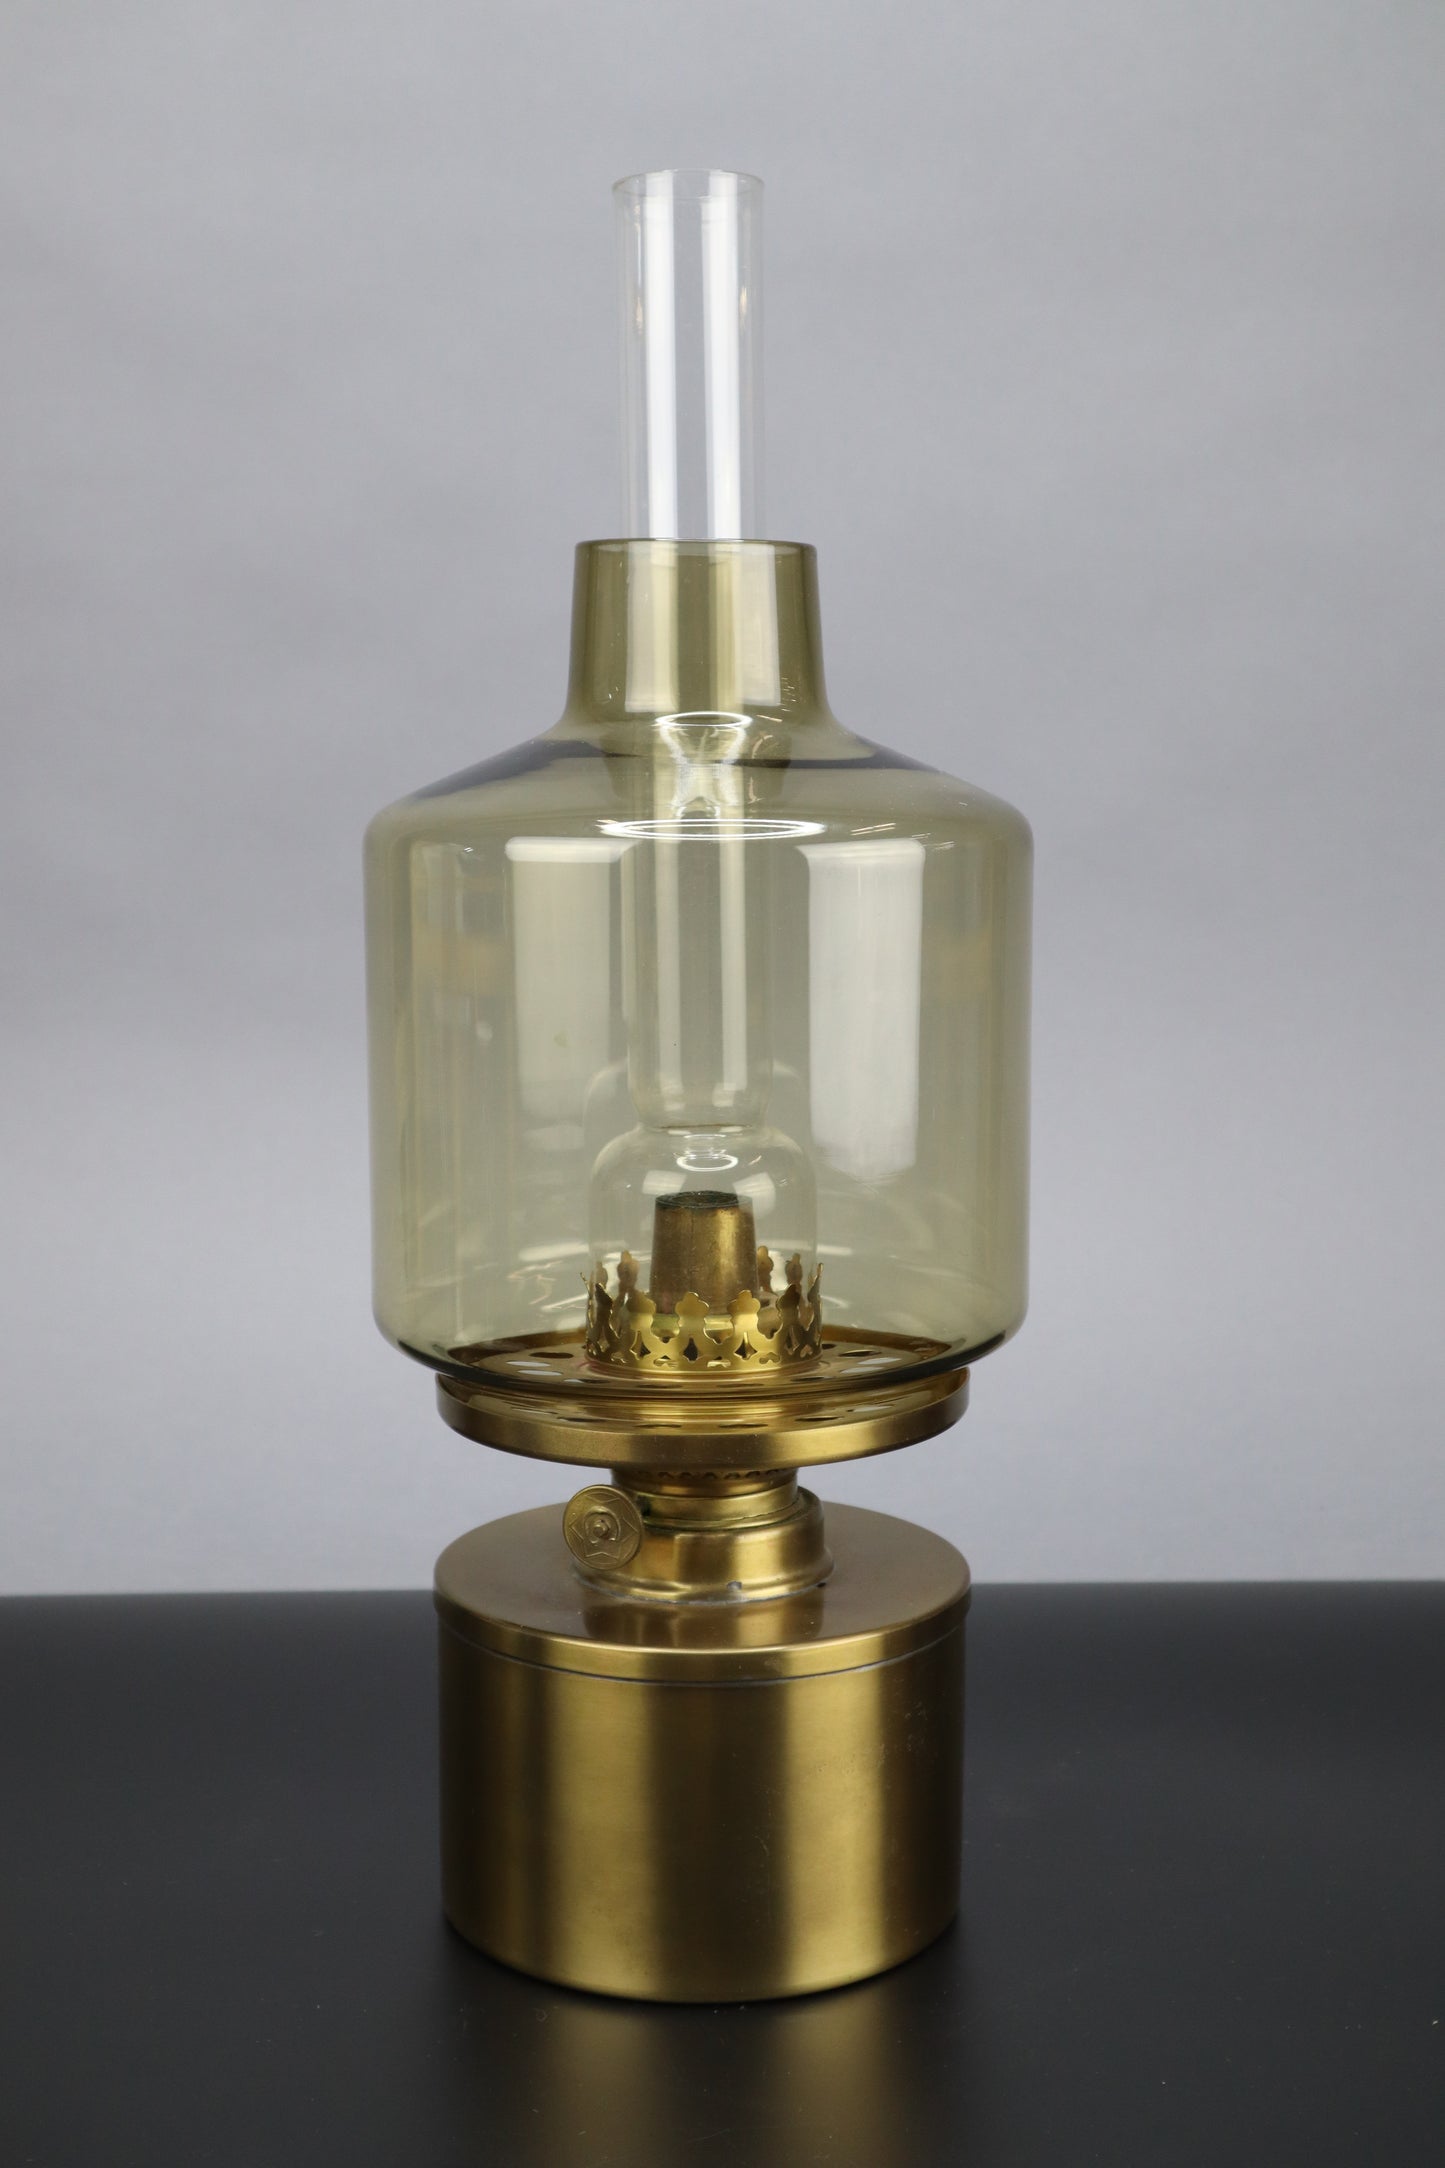 Copy of Hans-Agne Jakobsson 1960's Oil Lamp, Made in Sweden